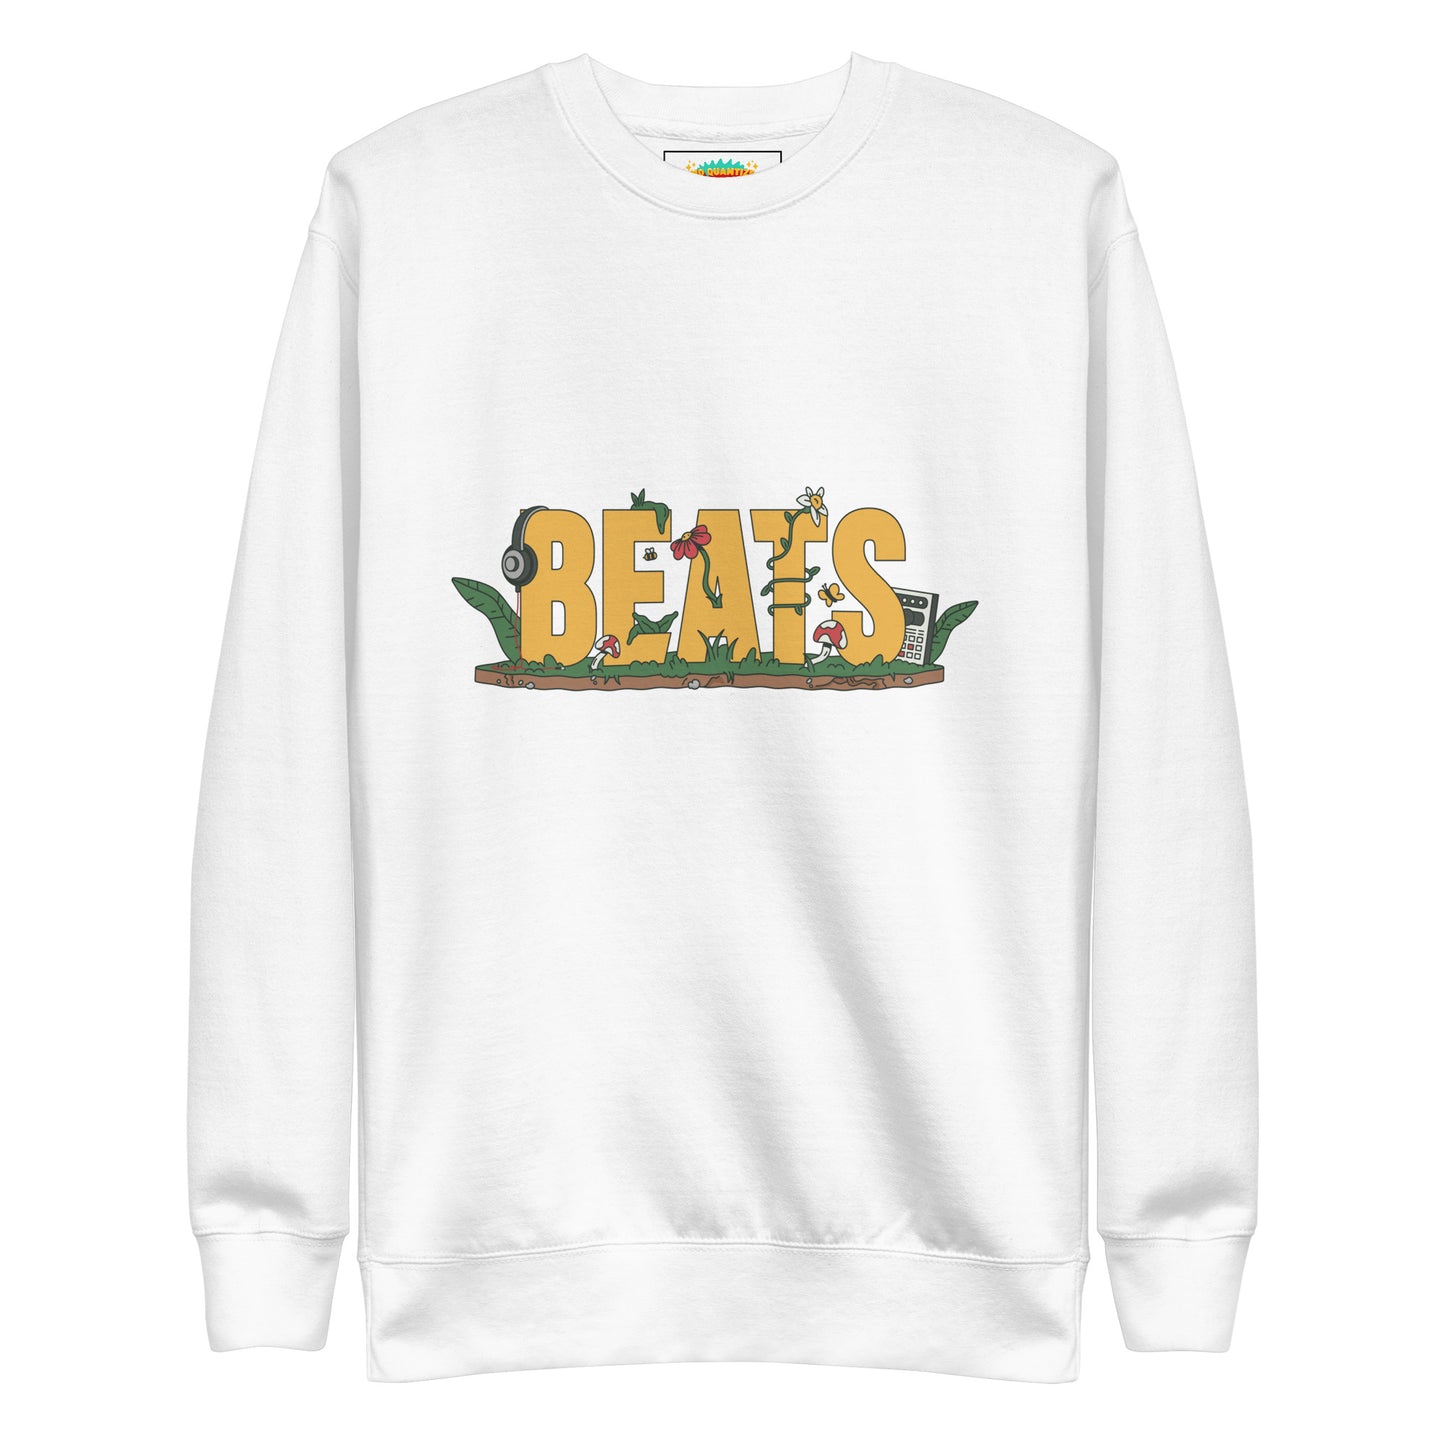 "BEATS" Sweatshirt